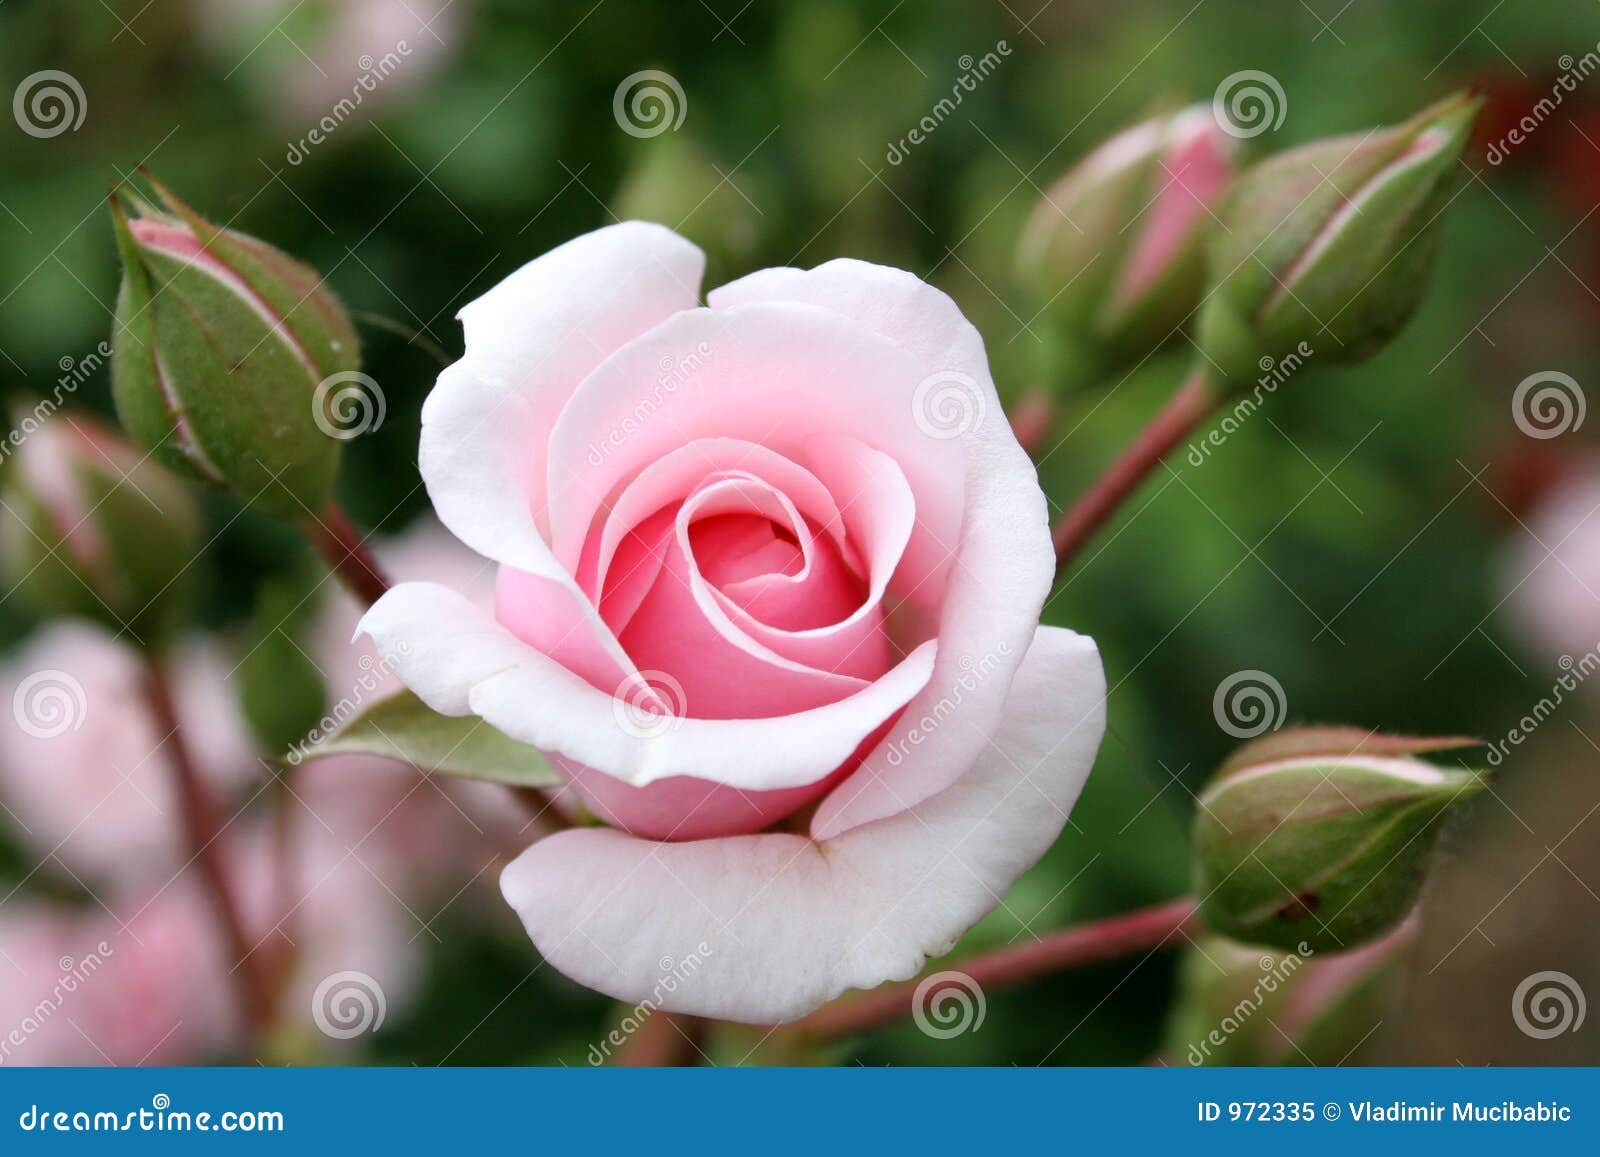 rose with rosebud